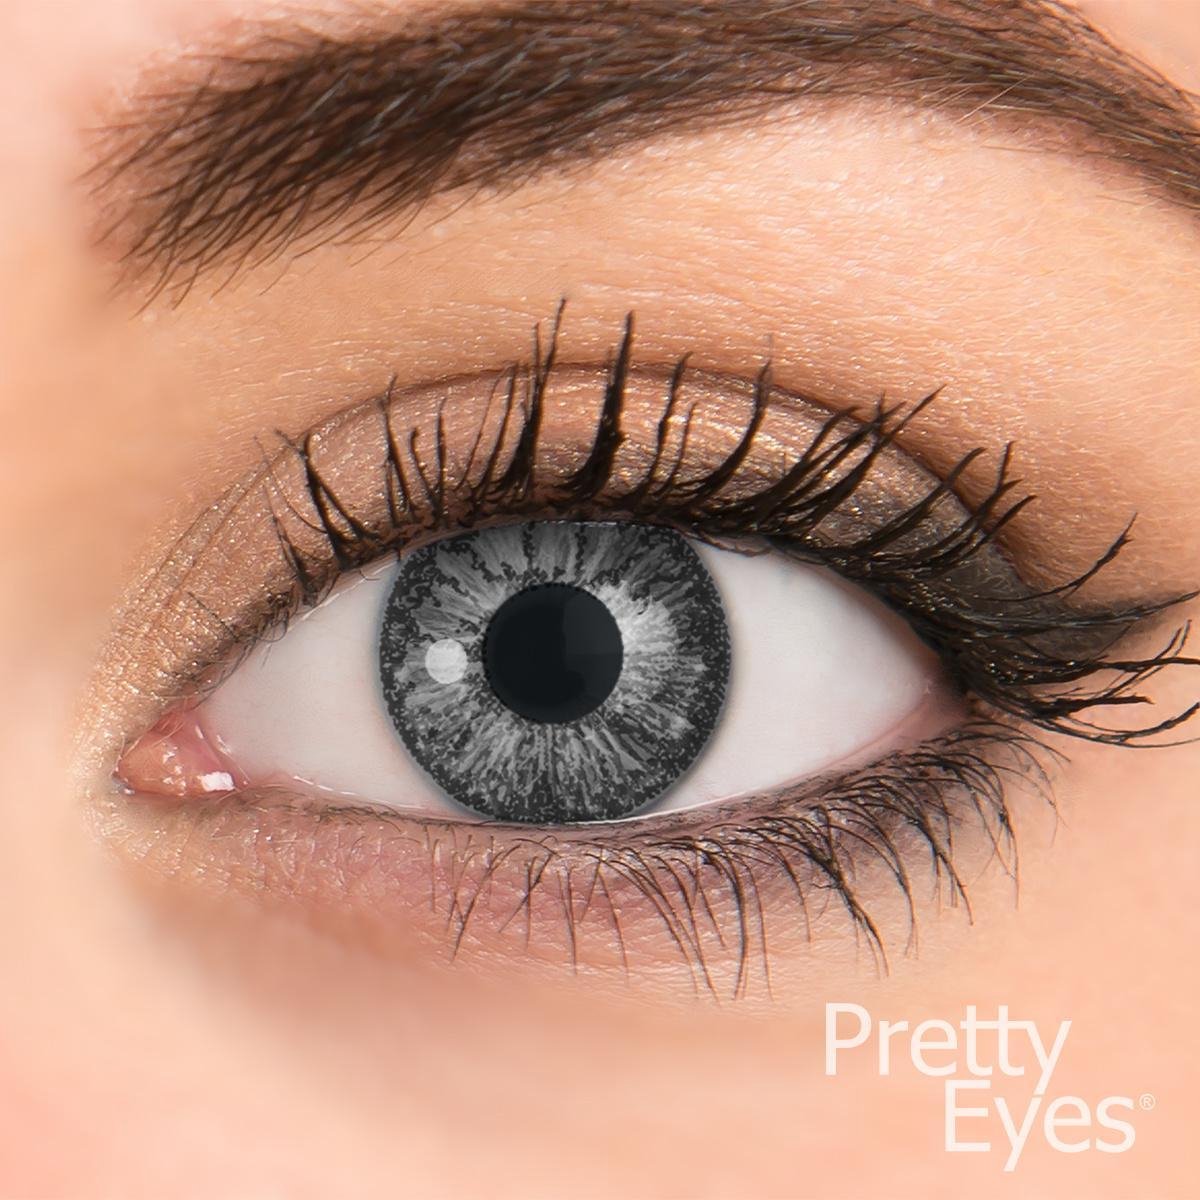 Pretty Eyes kleurlenzen grijs -3,00 - 4 stuks - daglenzen op sterkte